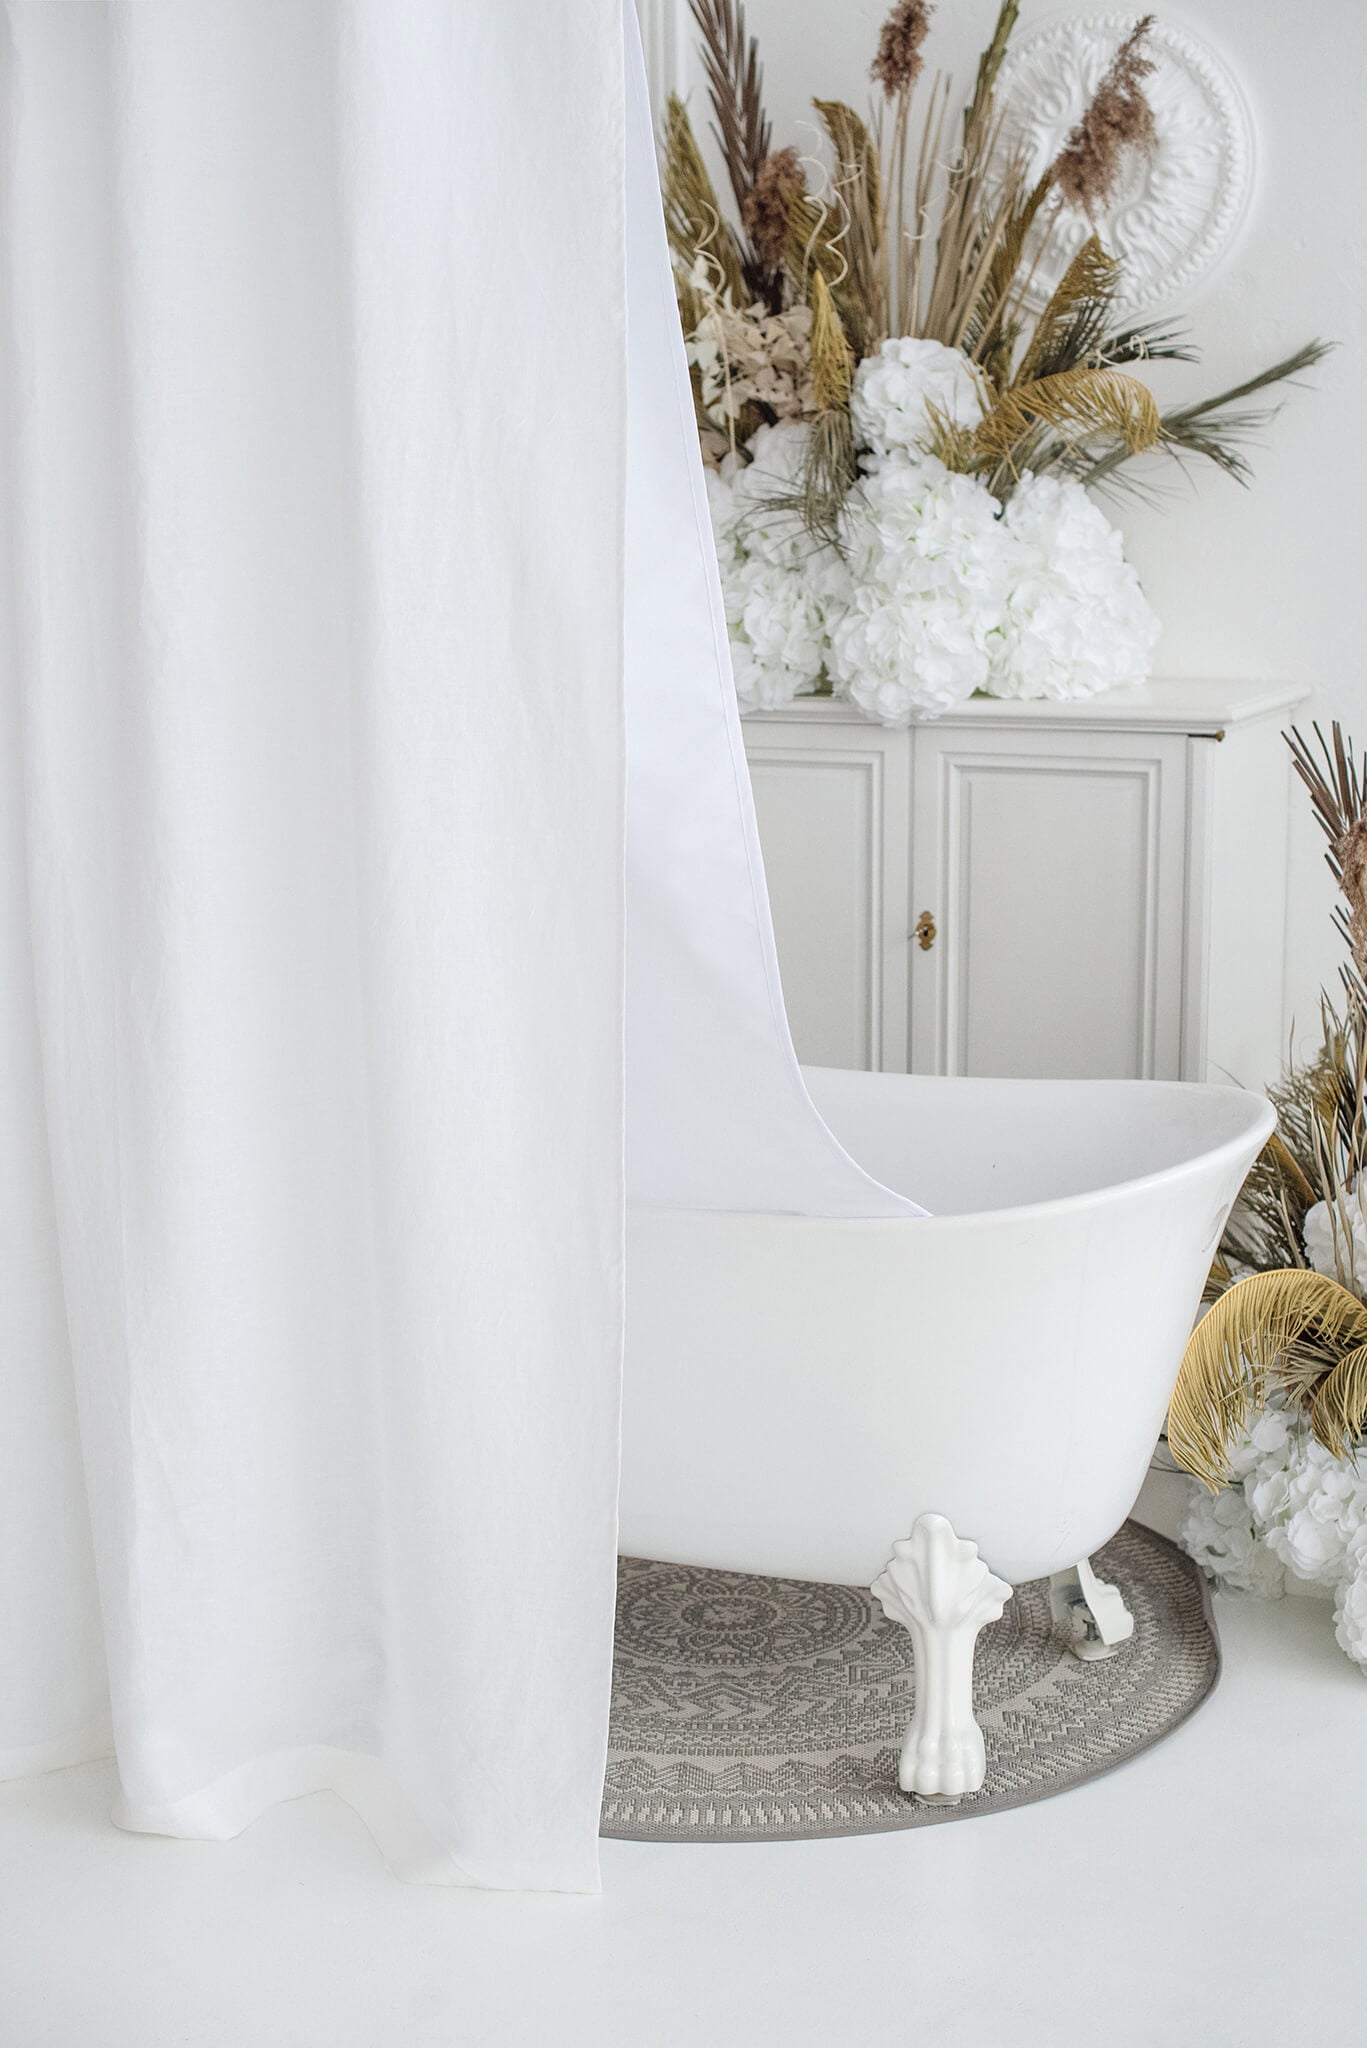 Linentalks Waterproof Feather Bathroom Shower Curtain Set, White and B –  Linentalks Home